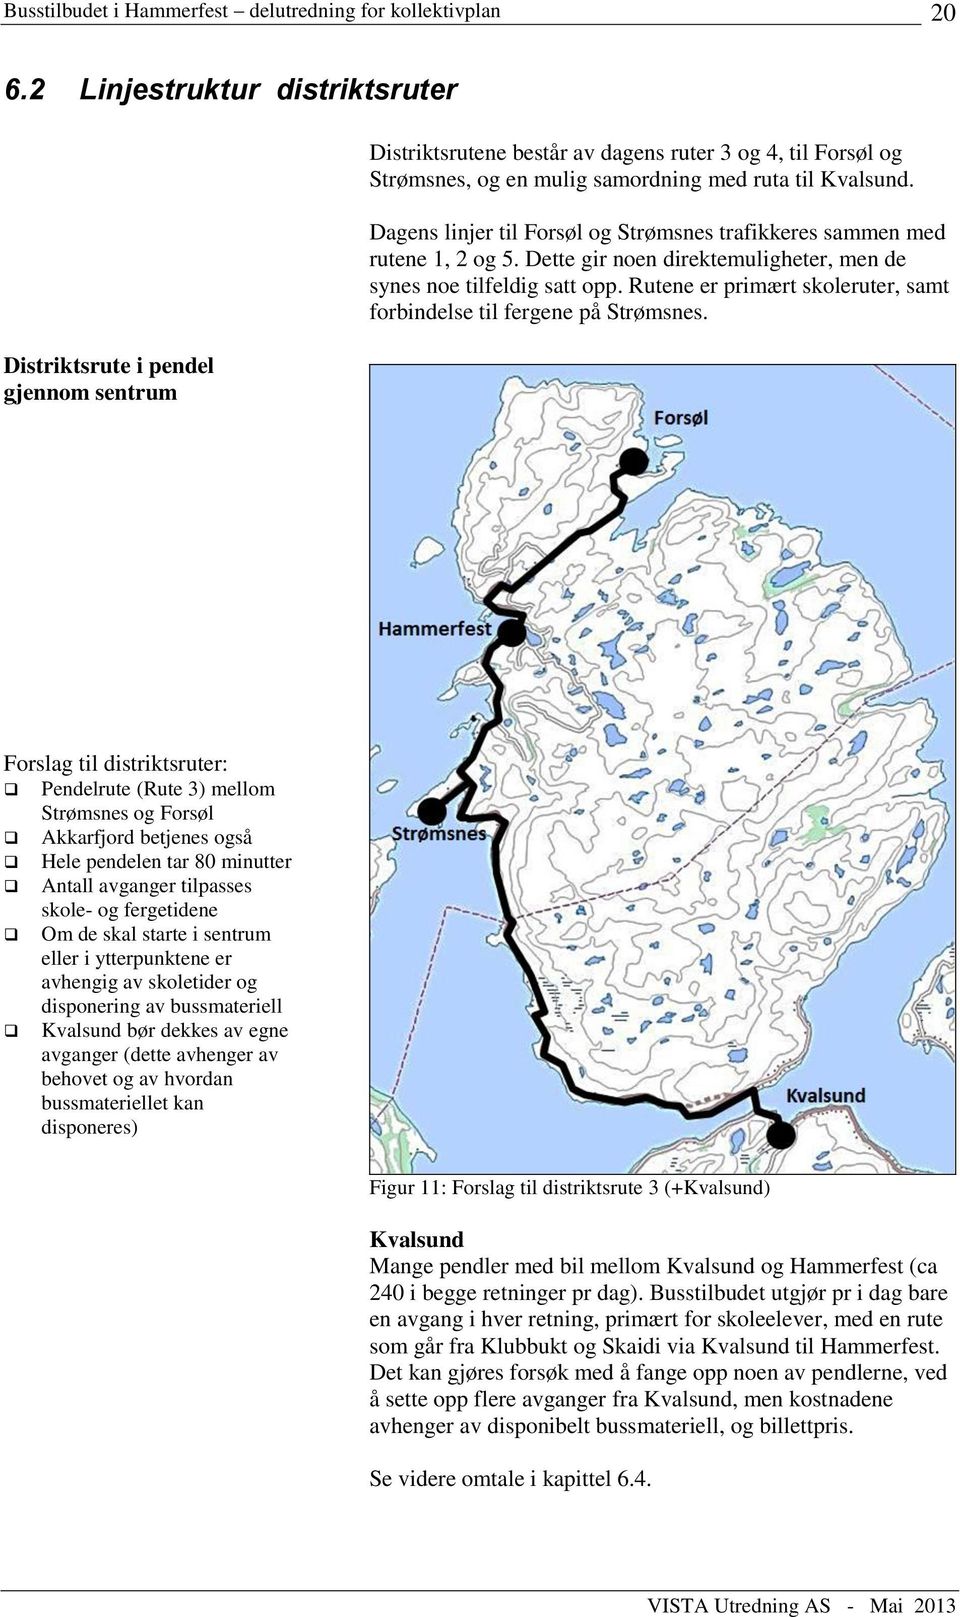 Rutene er primært skoleruter, samt forbindelse til fergene på Strømsnes.